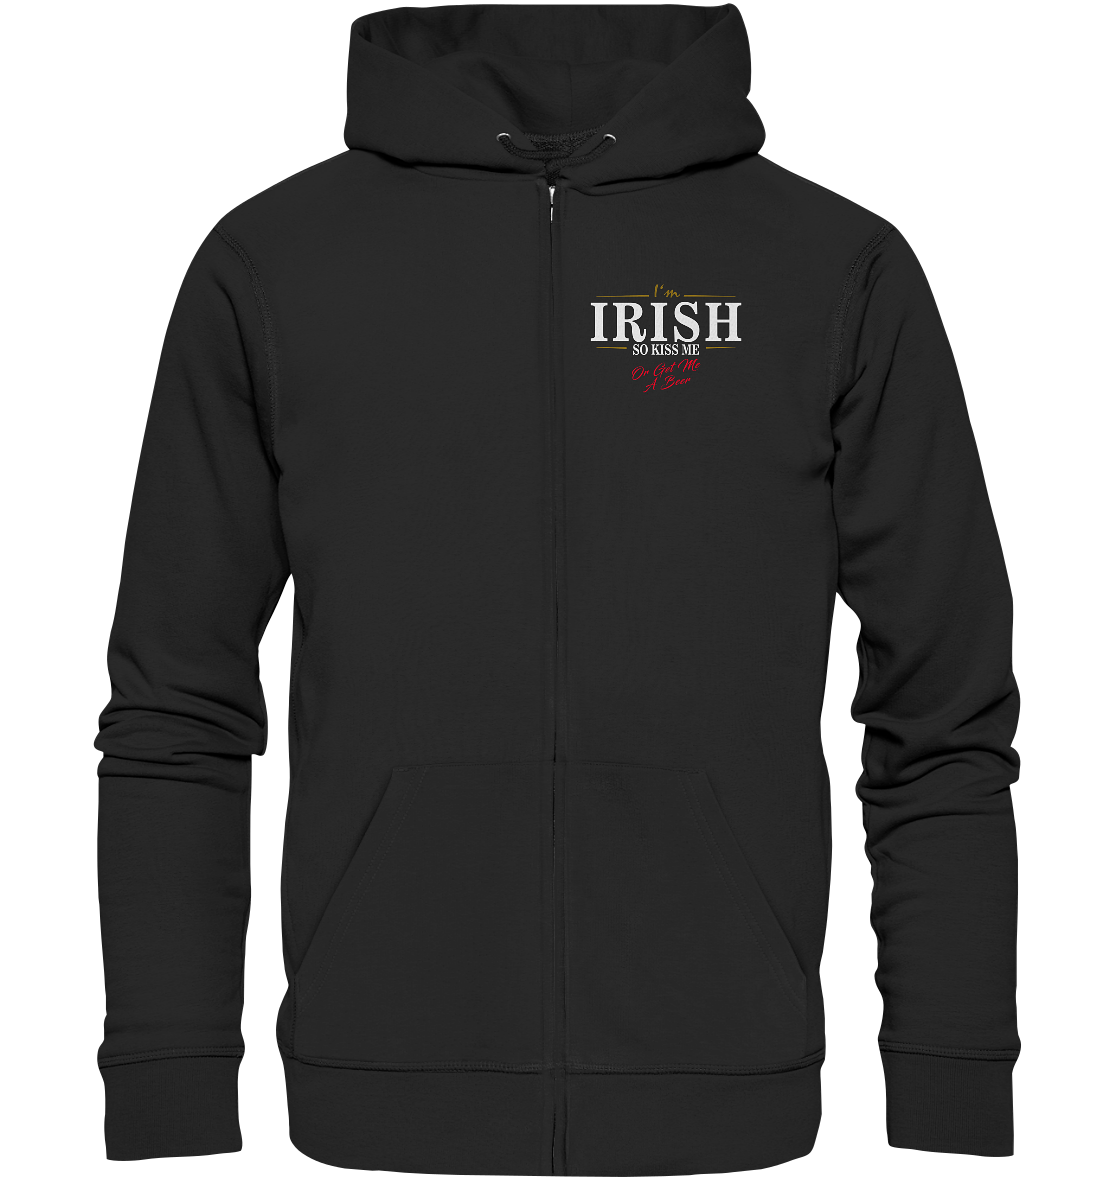 I'm Irish "So Kiss Me Or Get Me A Beer" - Organic Zipper